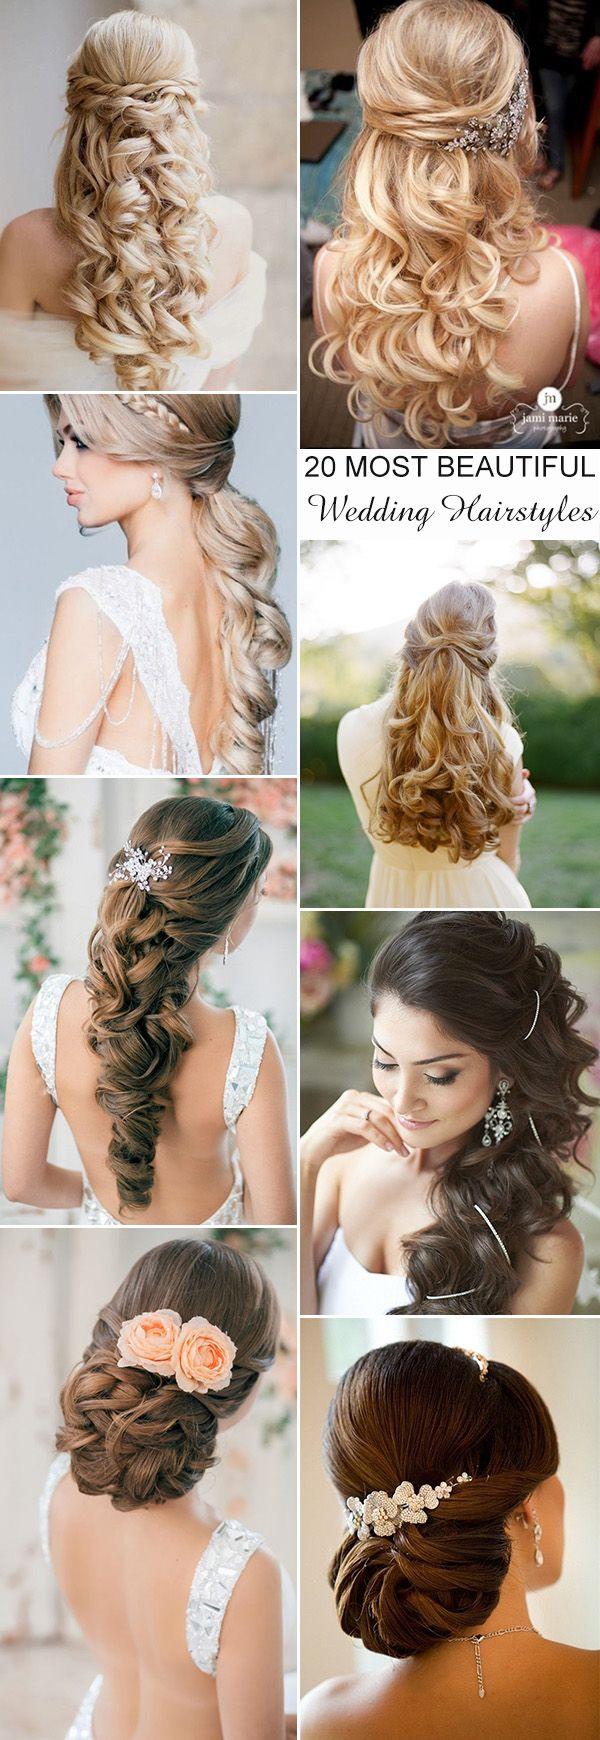 زفاف - 20 Most Elegant And Beautiful Wedding Hairstyles